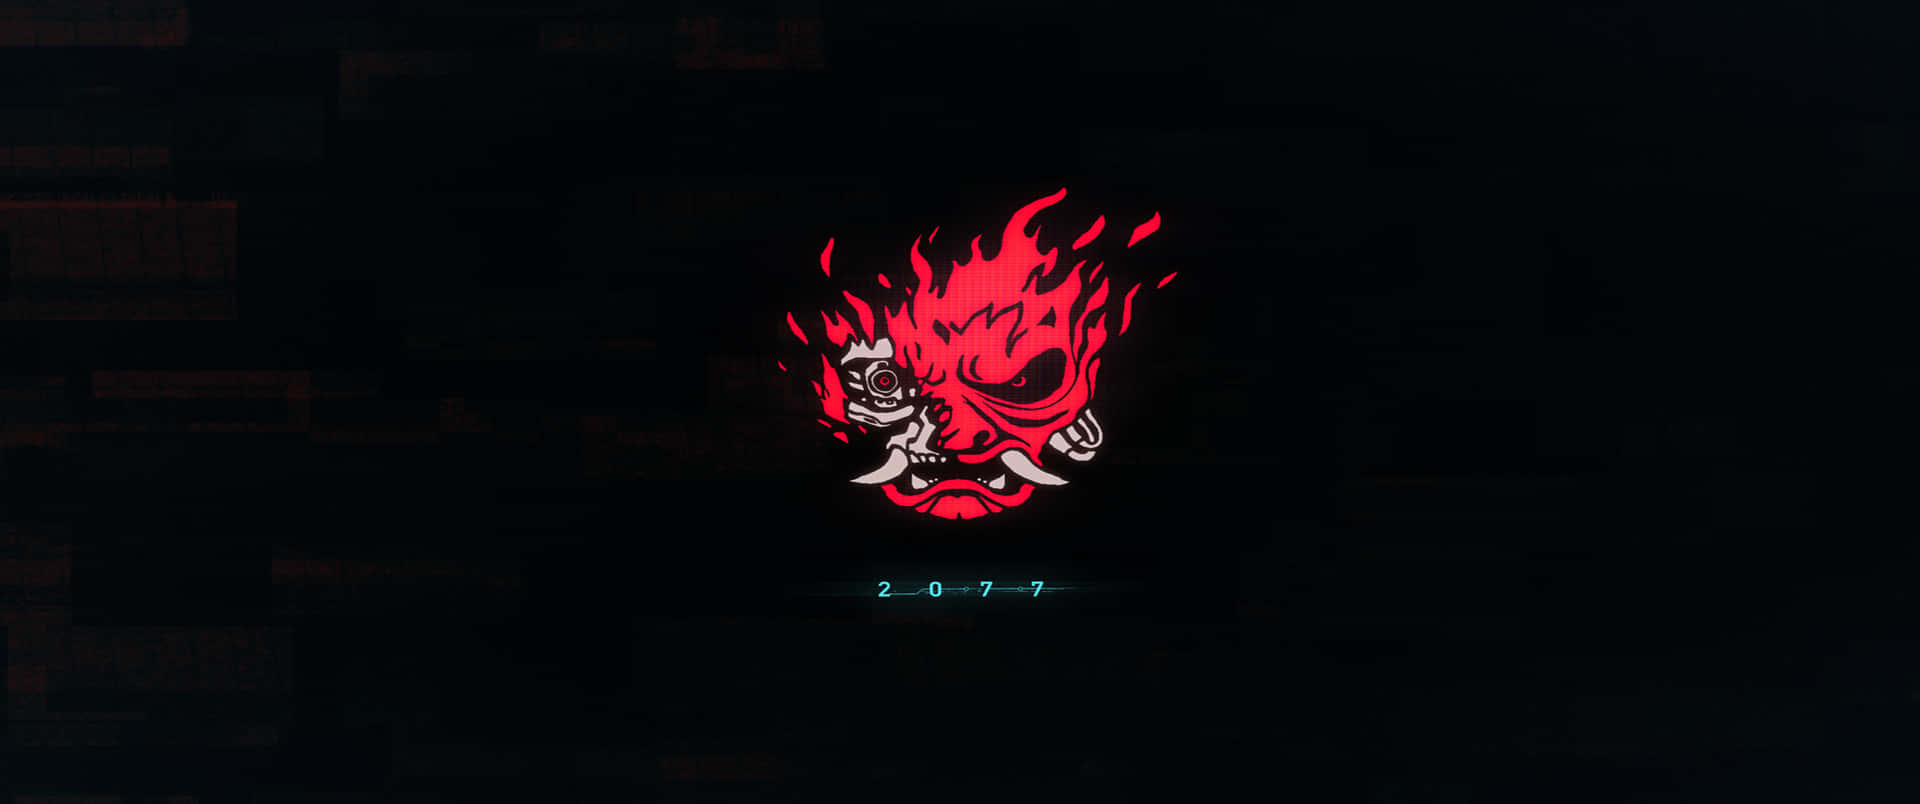 3440x1440p Cyberpunk 2077 Background Firey Red Skull